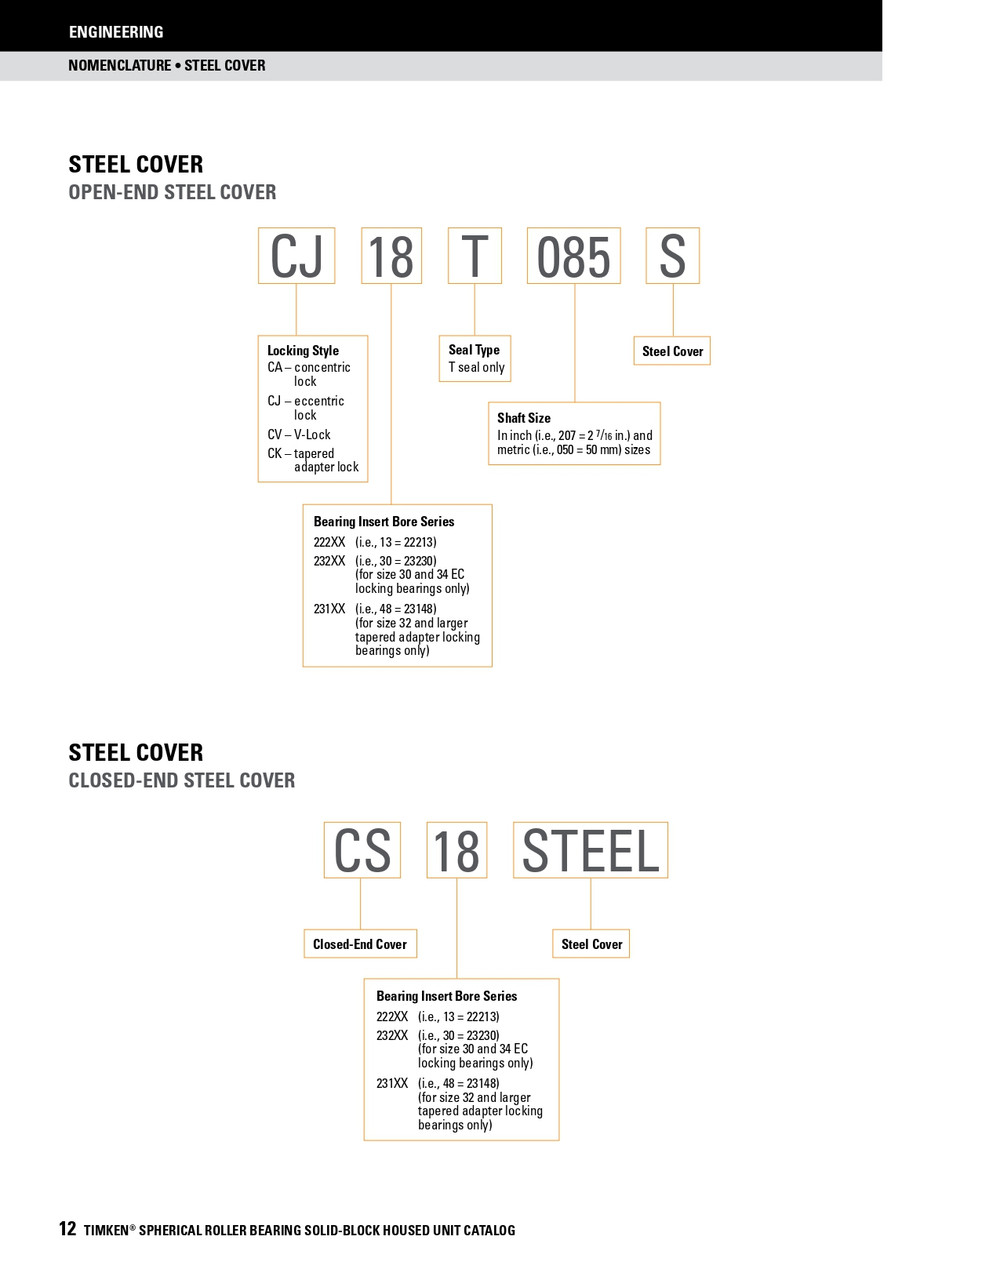 8" Timken SRB Steel Open End Cover w/Teflon Seal - TA/DV Taper Lock Bushing Type  CK44O800S